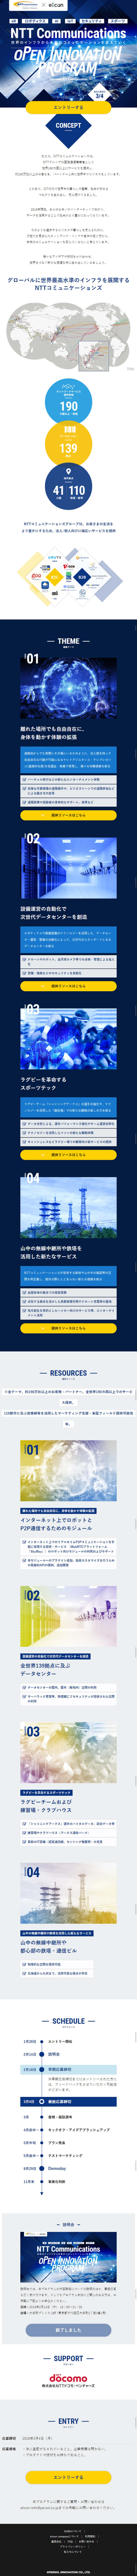 NTT Communications OPEN INNOVATION_sp_1